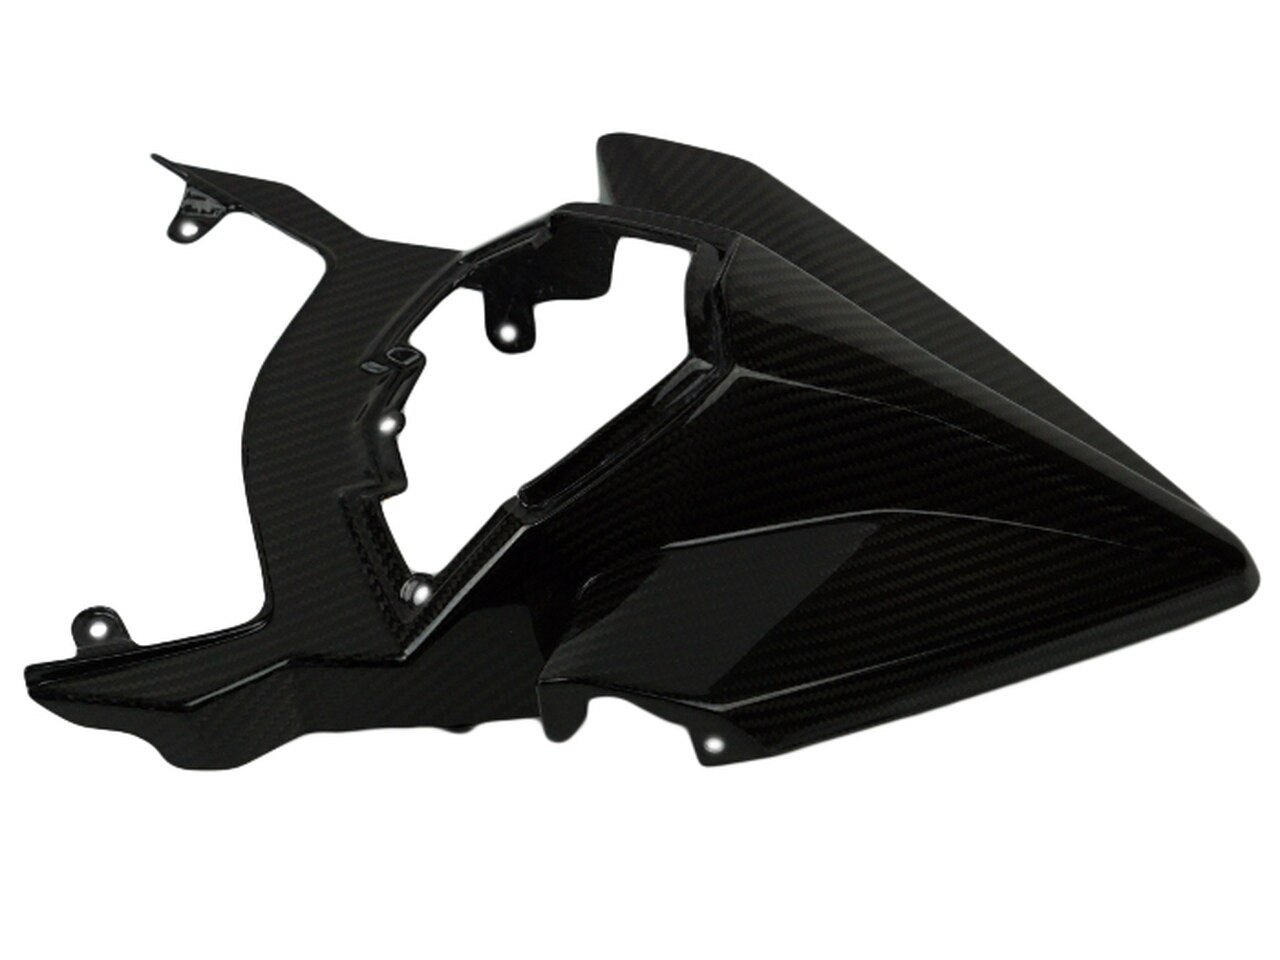 Motocomposites Tail Fairing in 100% Carbon Fiber for Kawasaki Ninja H2